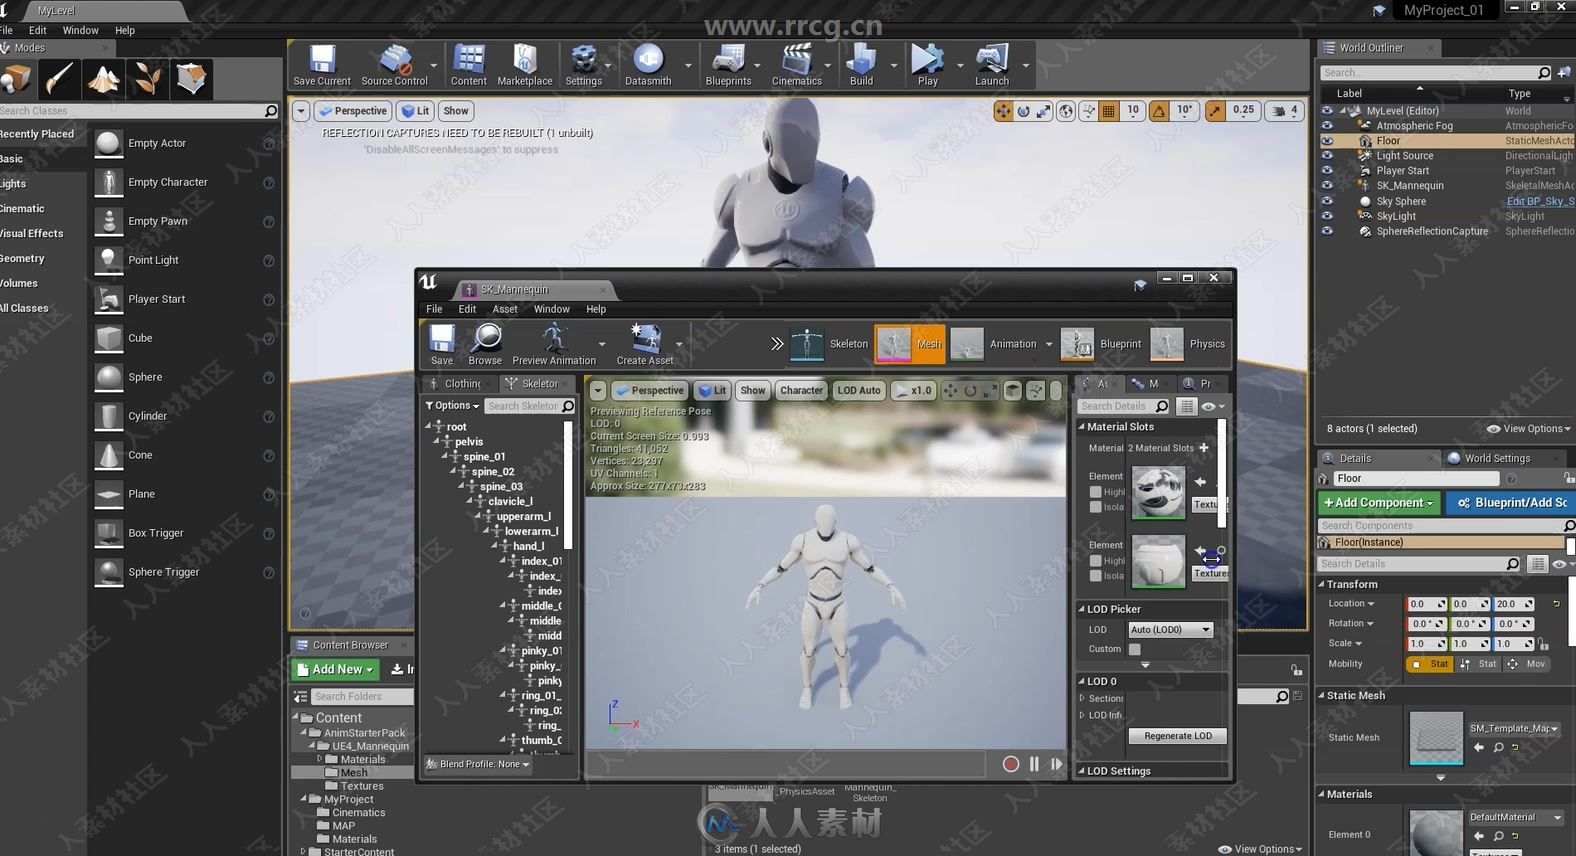 Unreal Engine 4游戏开发完全入门指南频教程